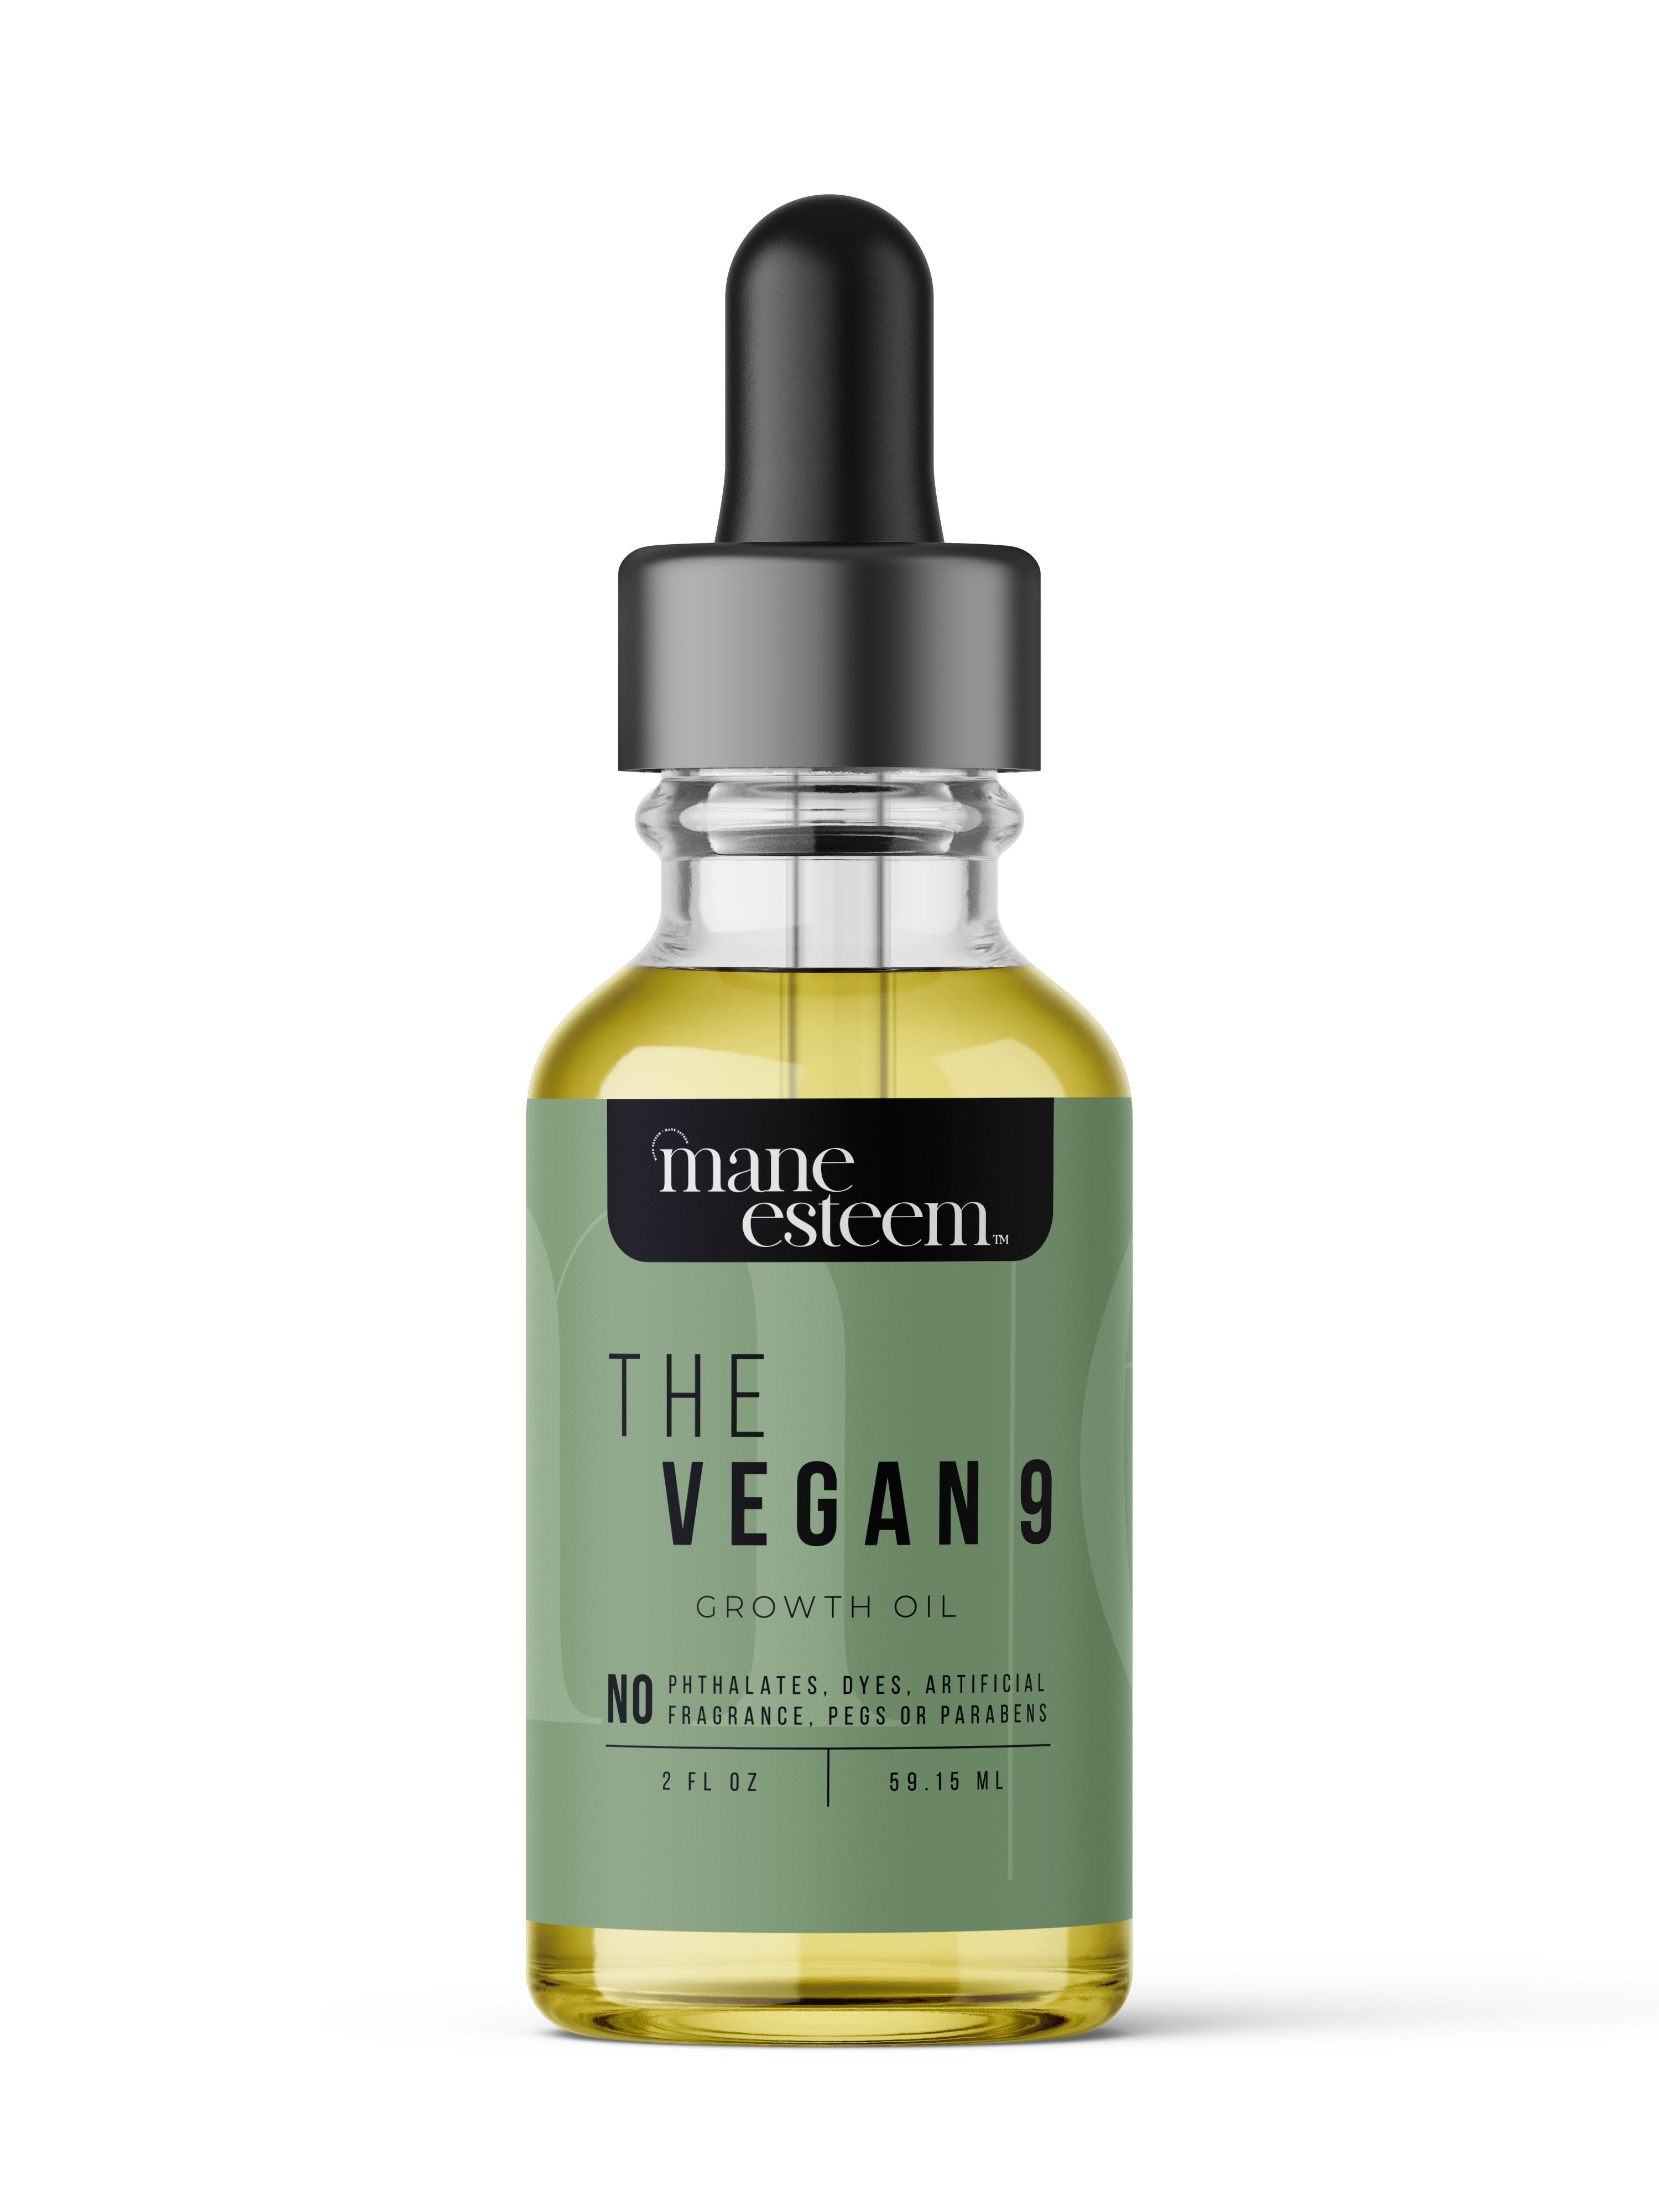 The Vegan 9 Growth Oil